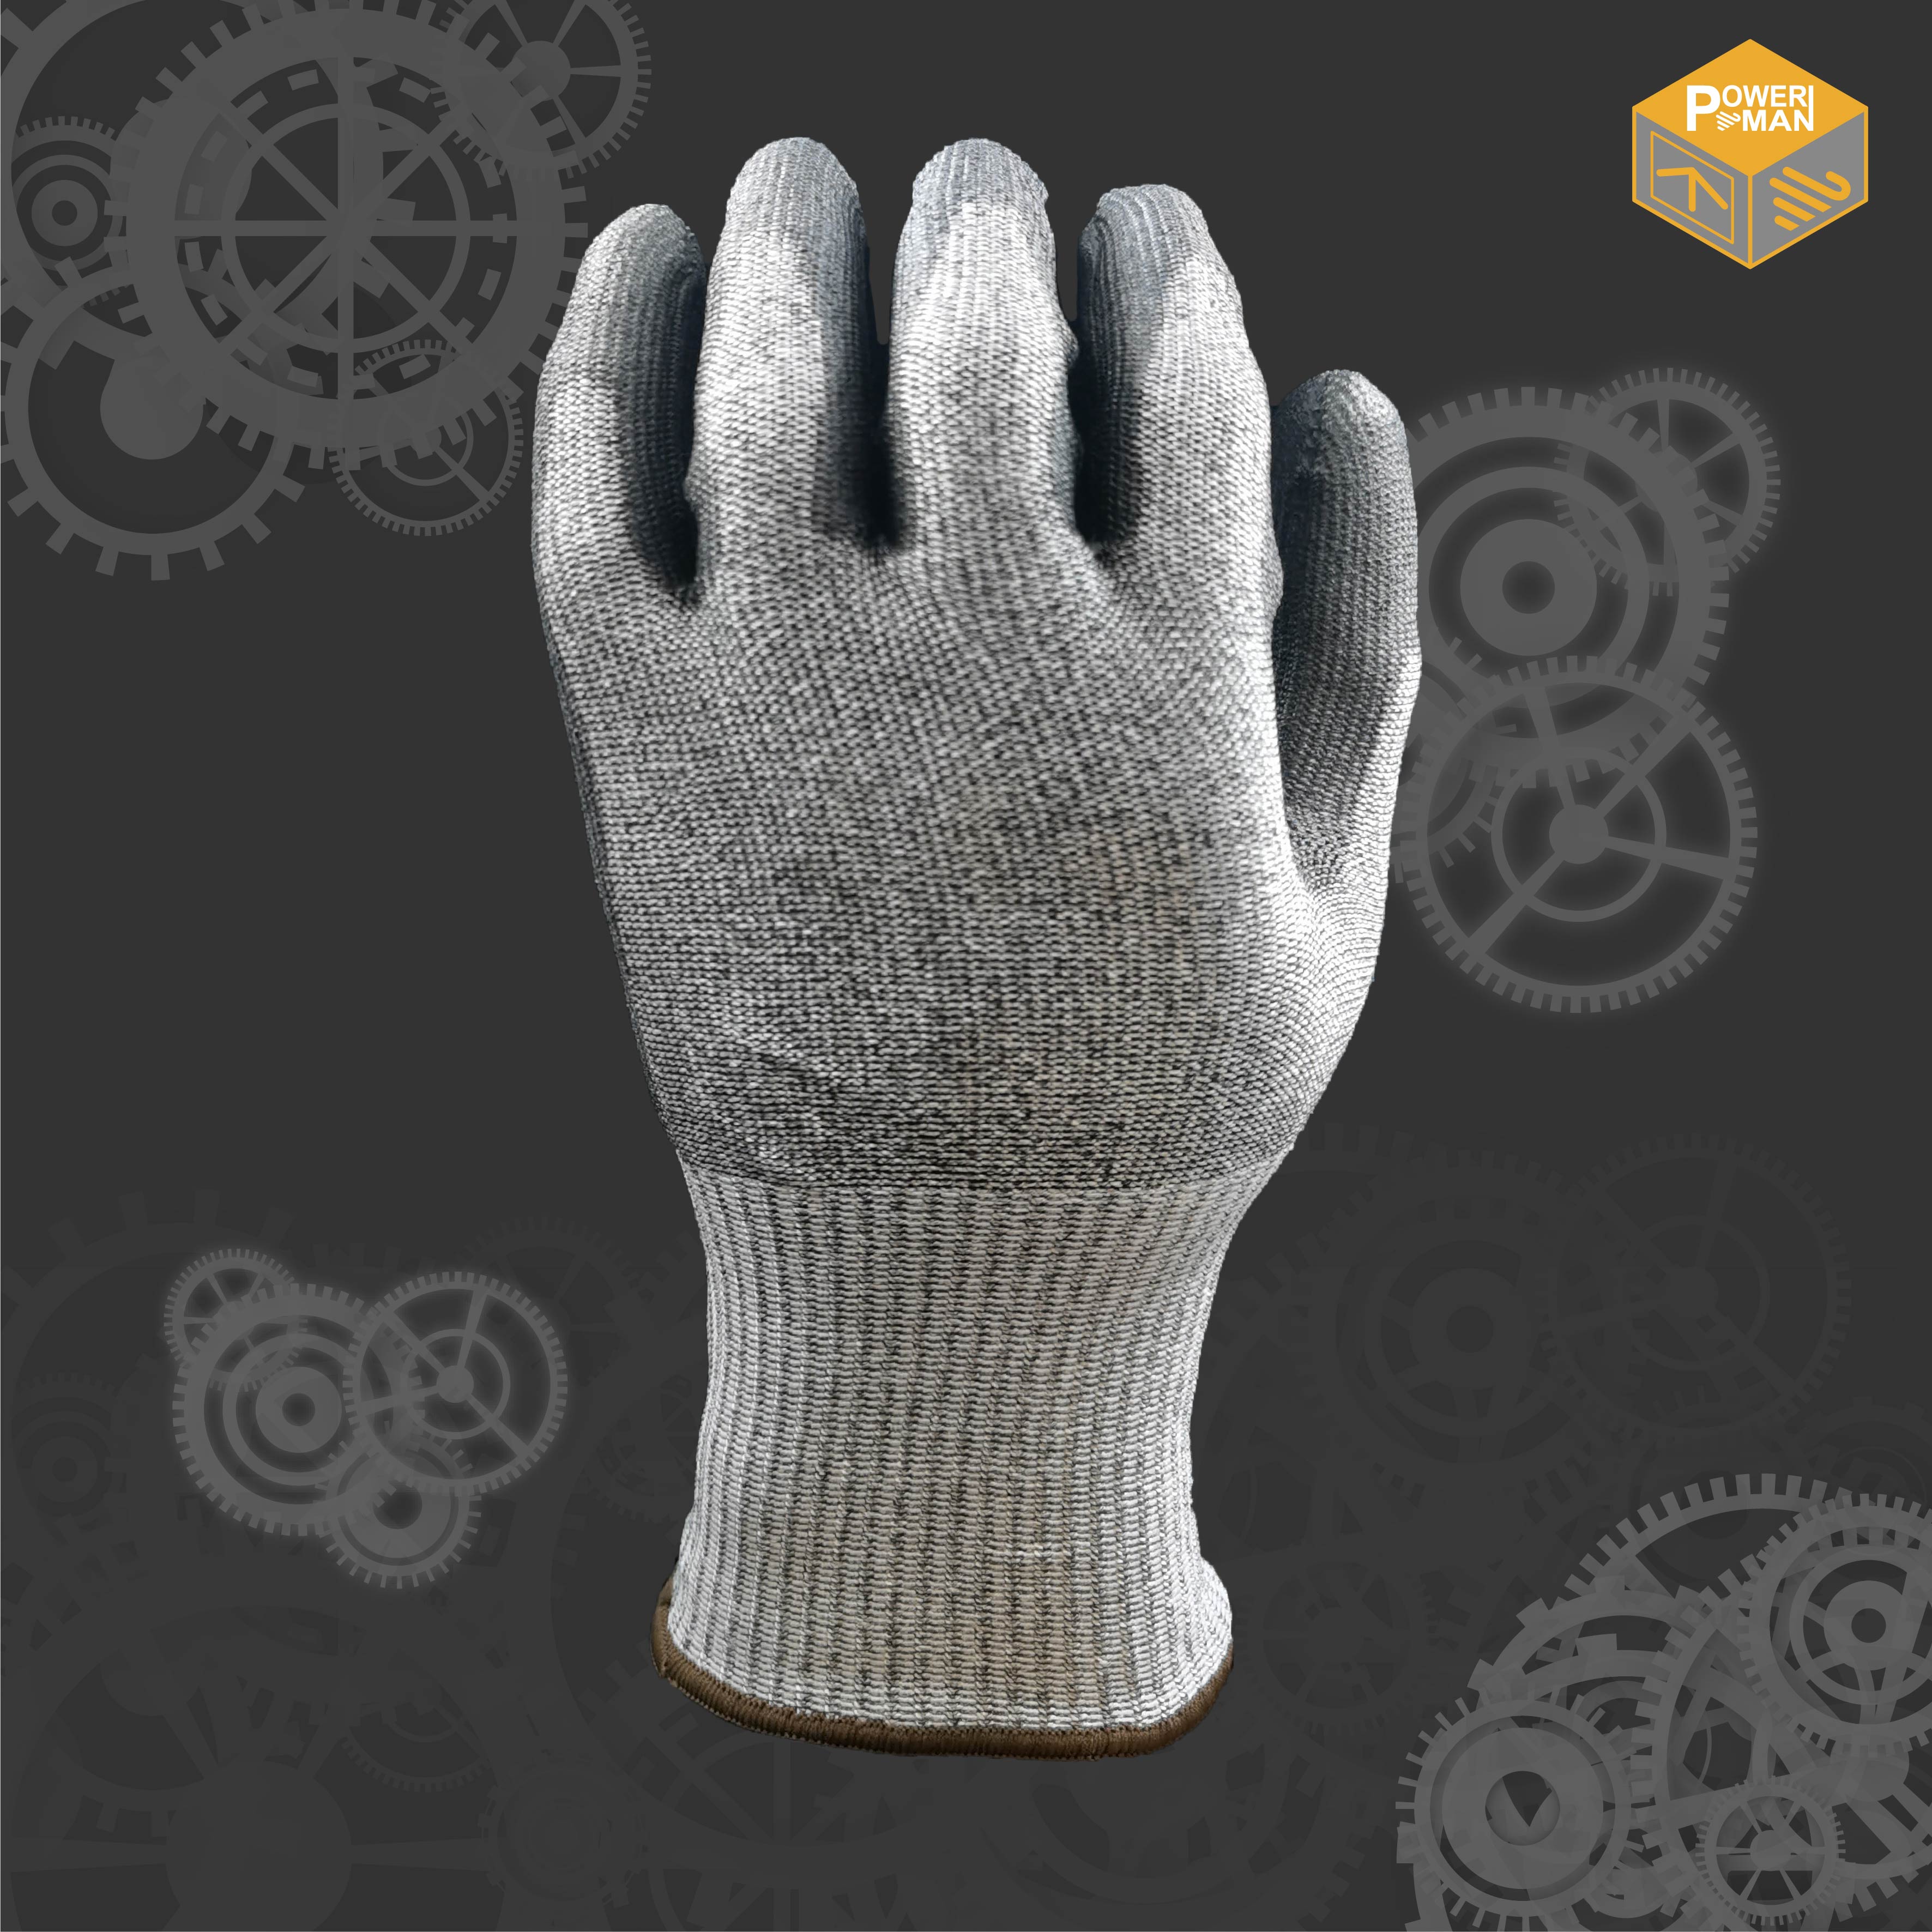 Powerman® 13 Gague دستکش HPPE روکش شده با کف PU محبوب (برش ANSI/ISEA: A5) تصویر ویژه